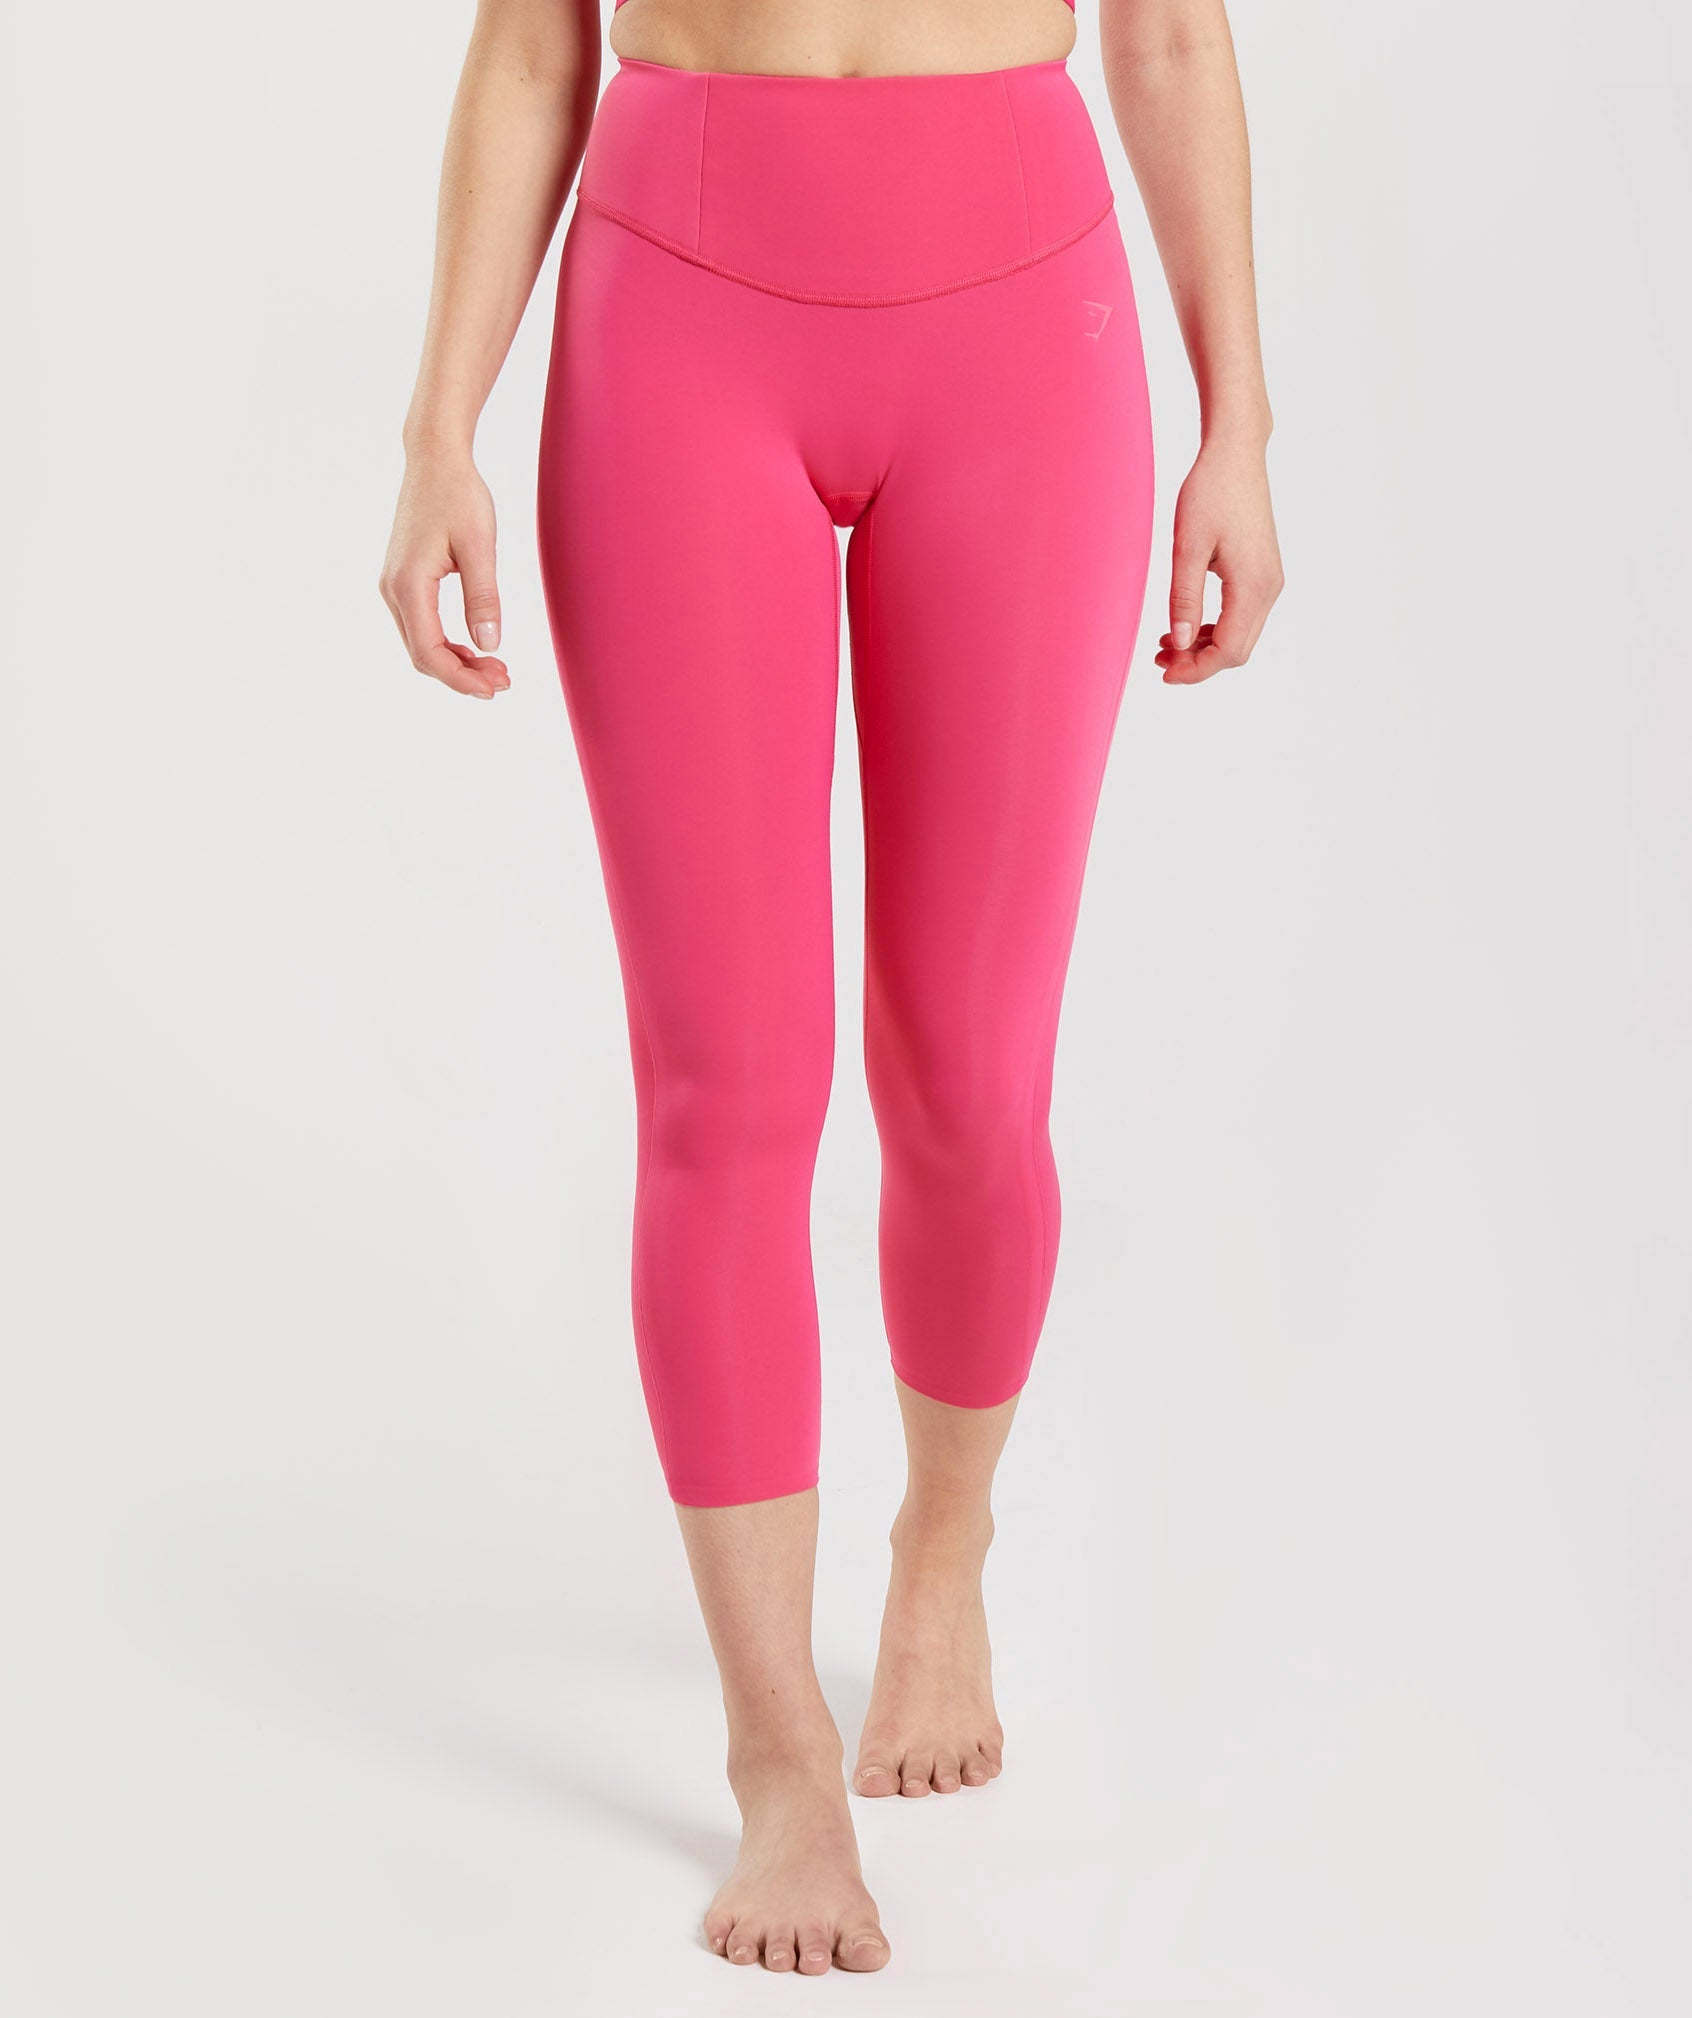 Gymshark ultra seamless leggings and bra 2 piece set Small Women's neon pink